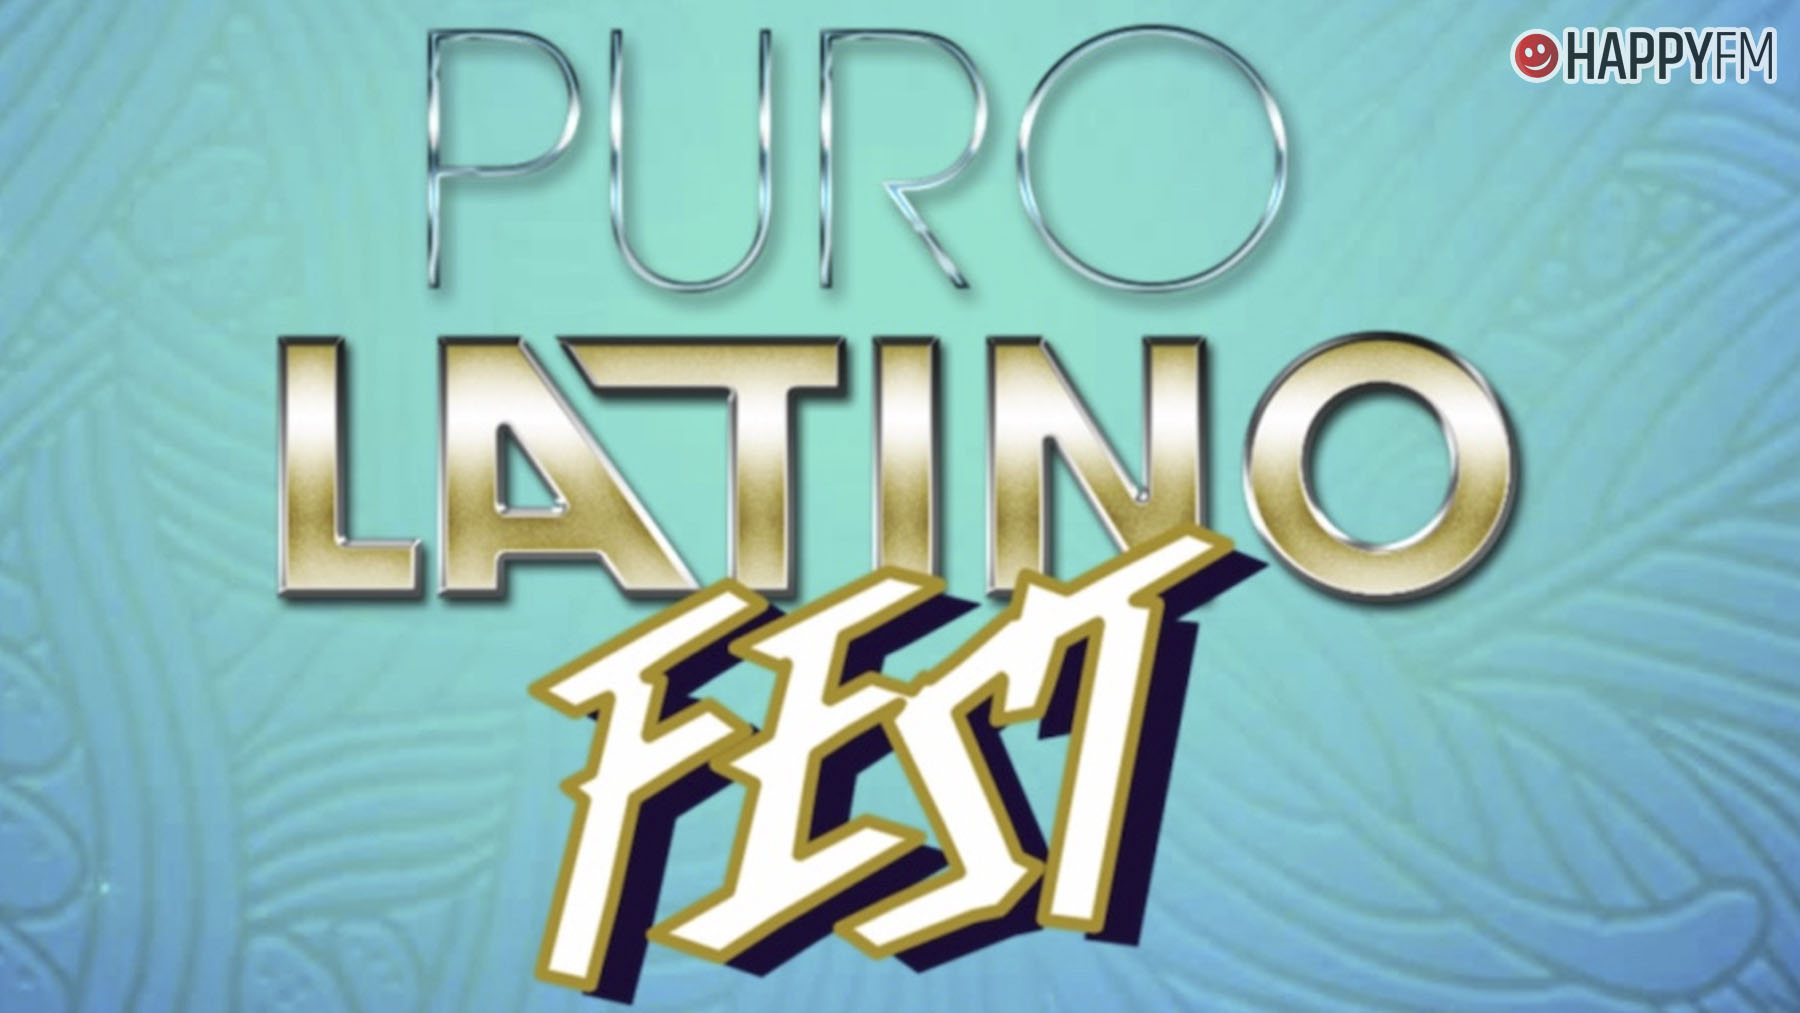 Puro Latino Fest Torremolinos Daddy Yankee, Natti Natasha y Sech